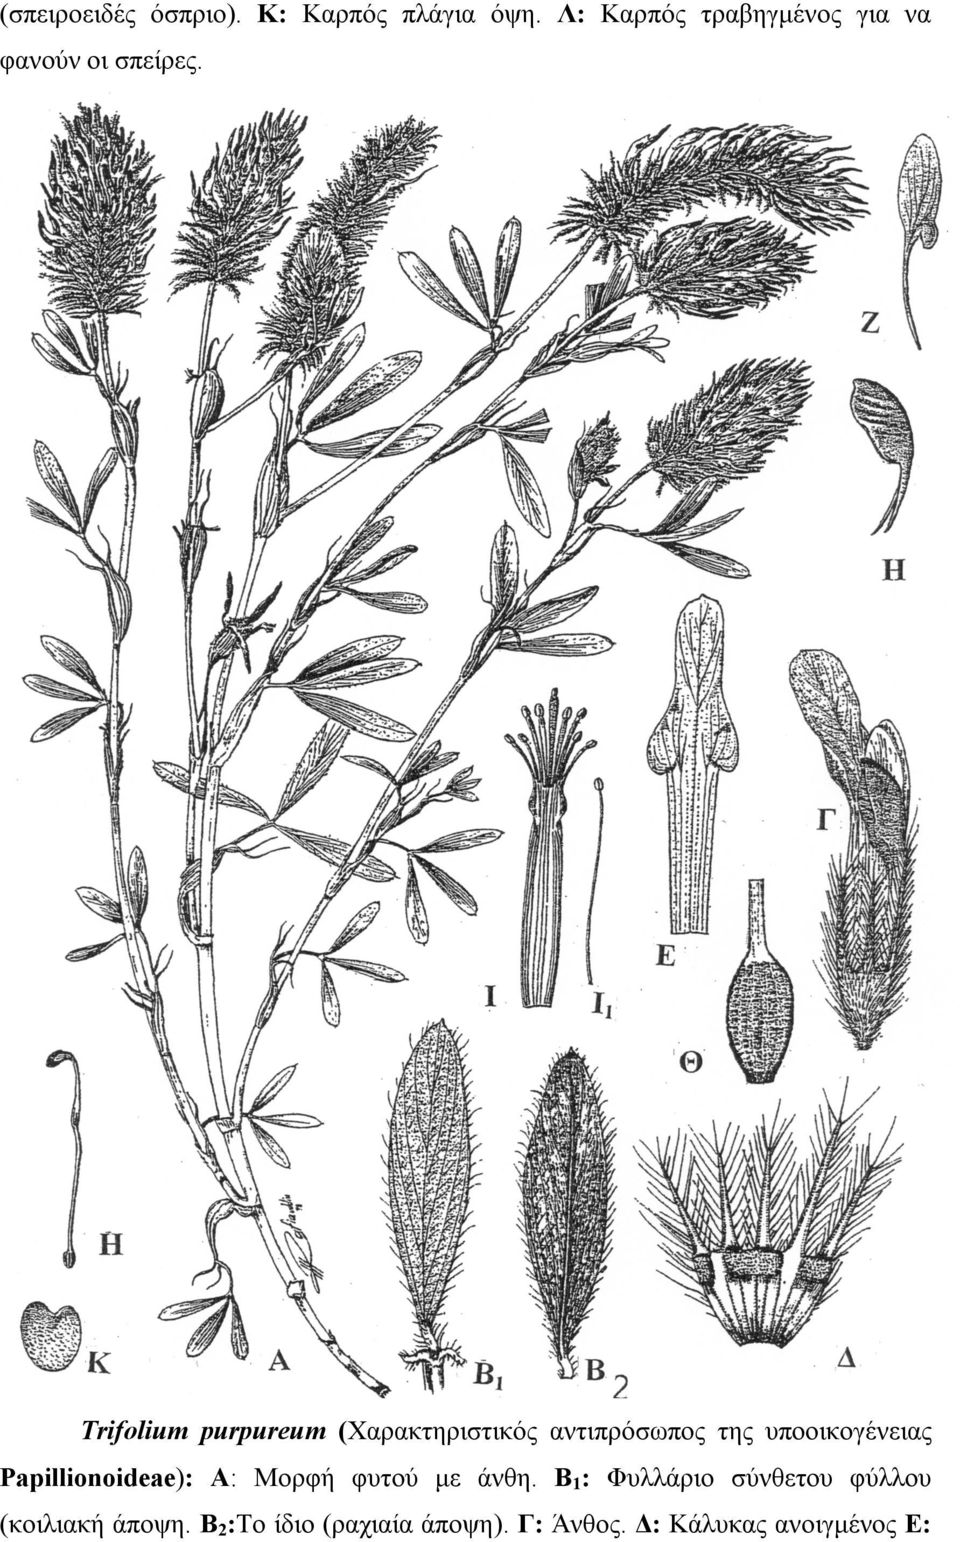 Trifolium purpureum (Χαρακτηριστικός αντιπρόσωπος της υποοικογένειας